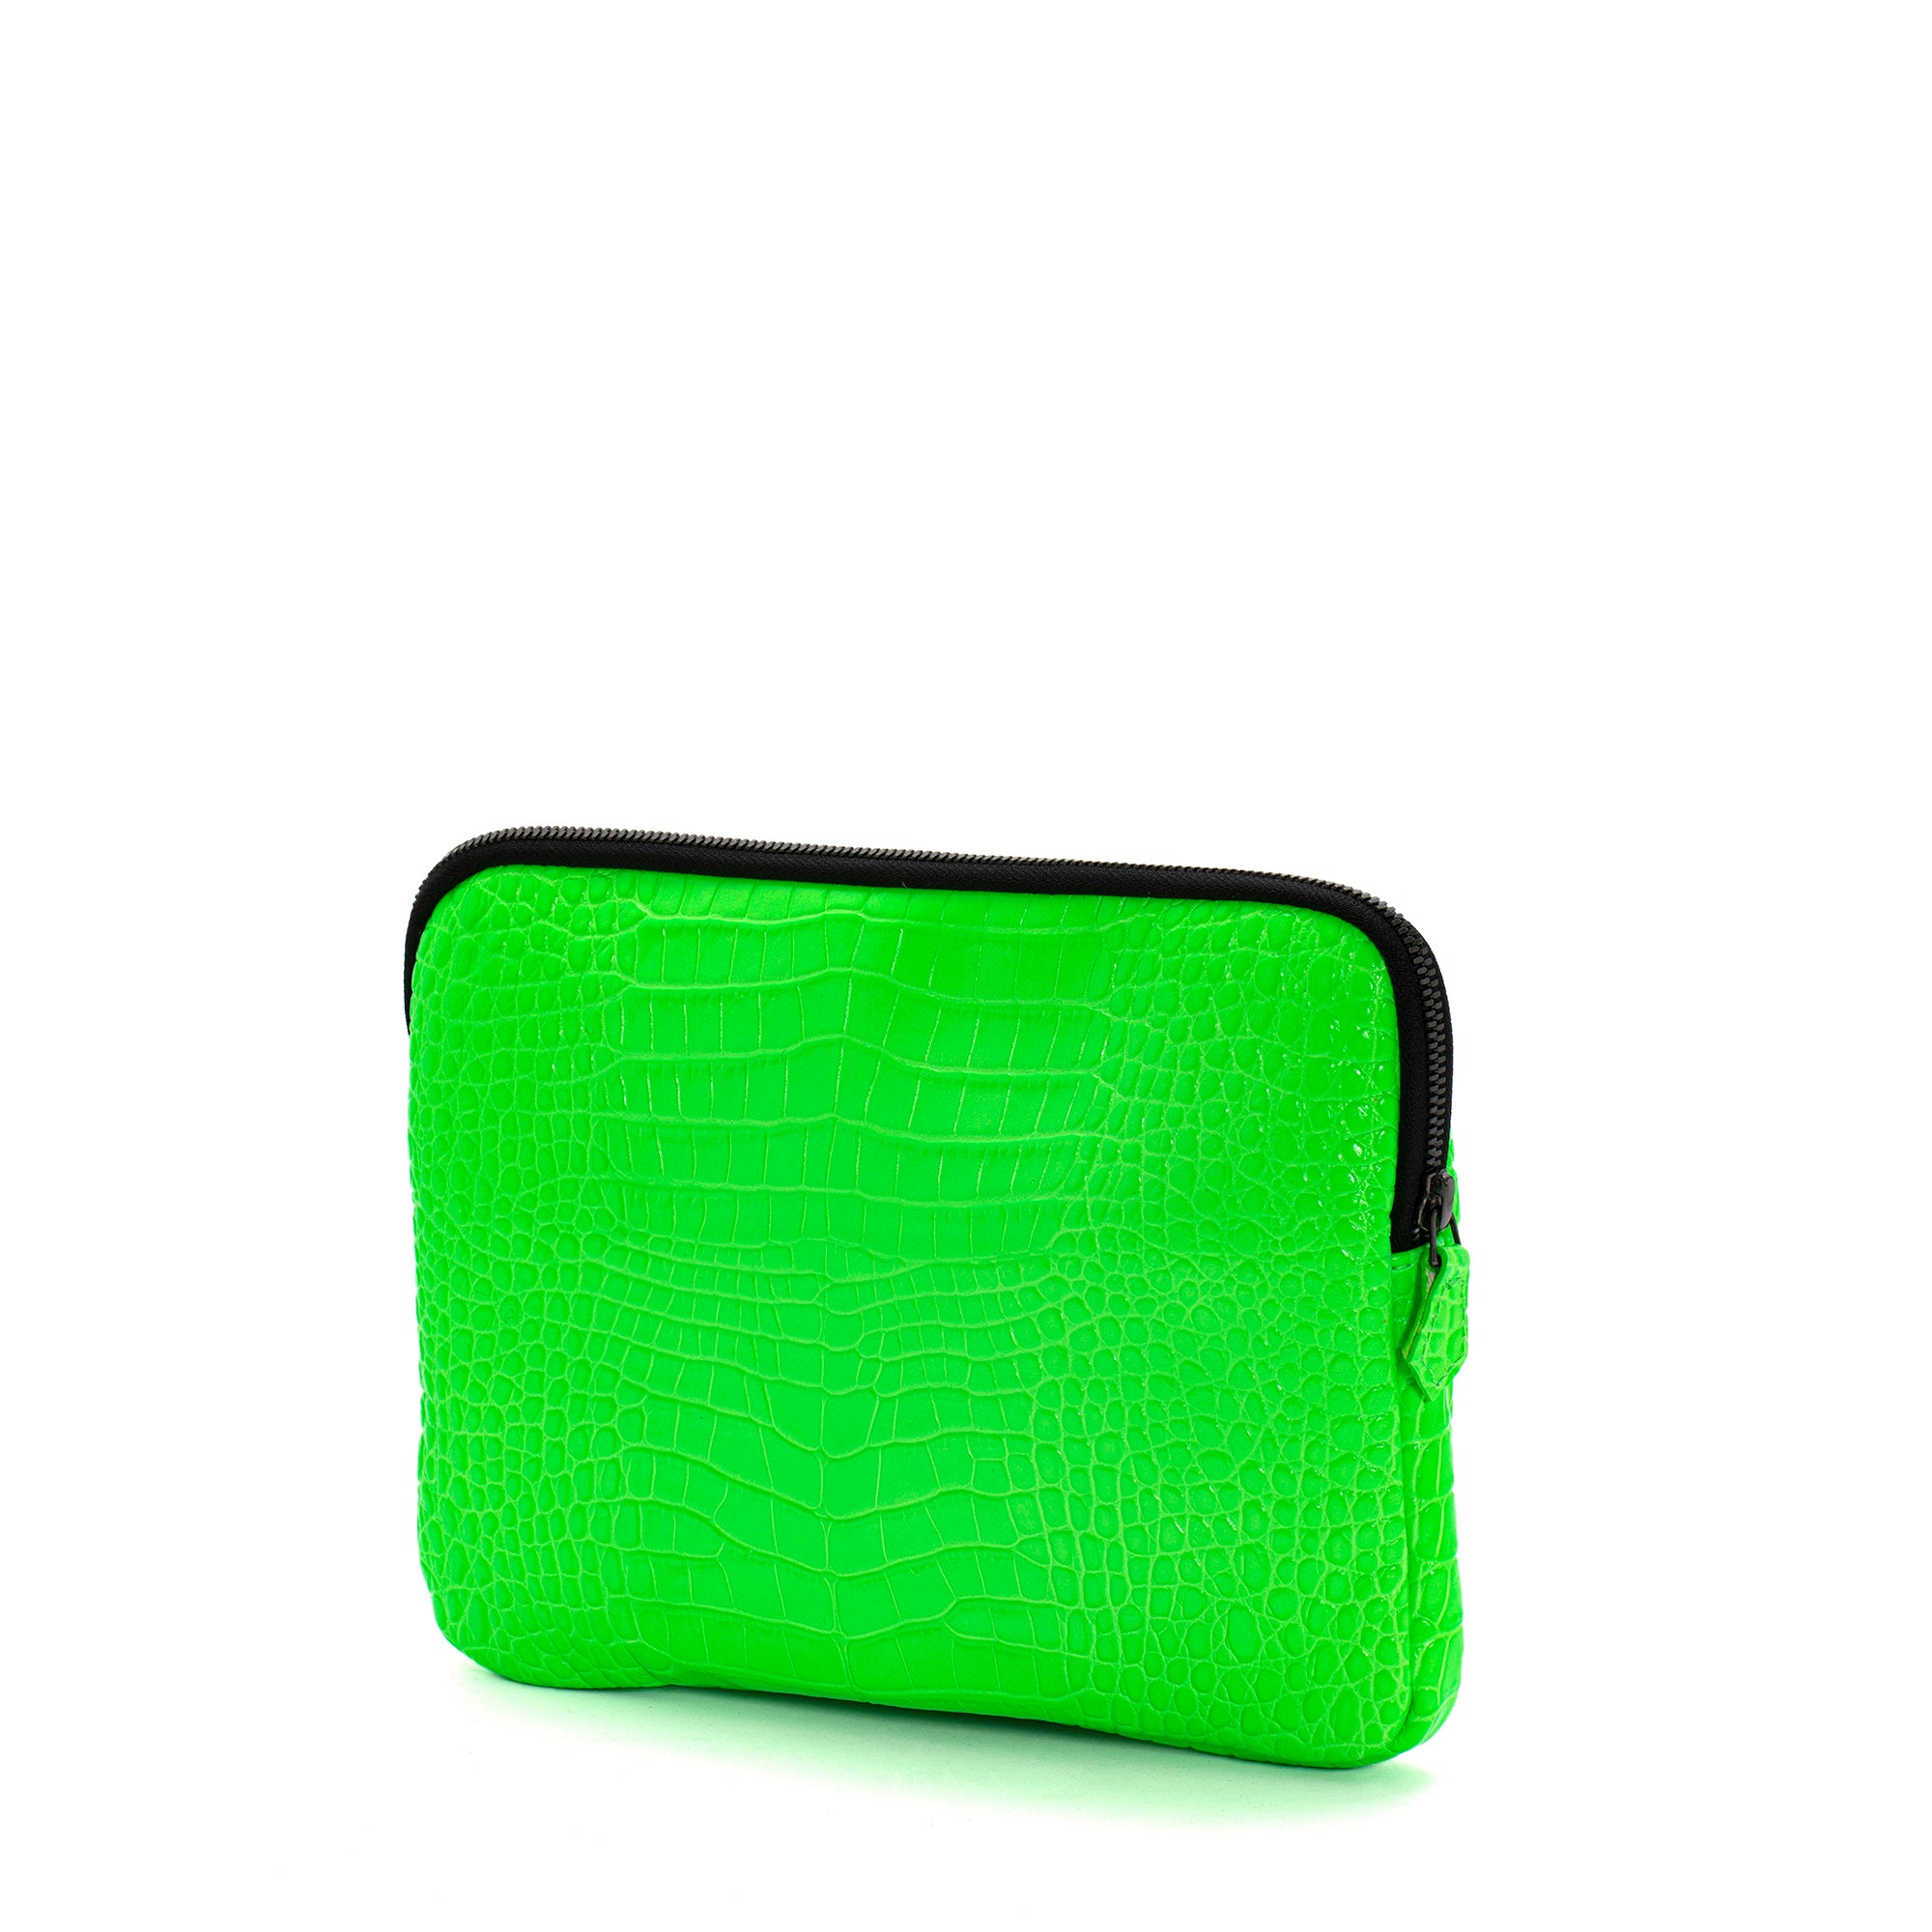 Neon Lime Snake Handbag | Small Handbag for Essentials